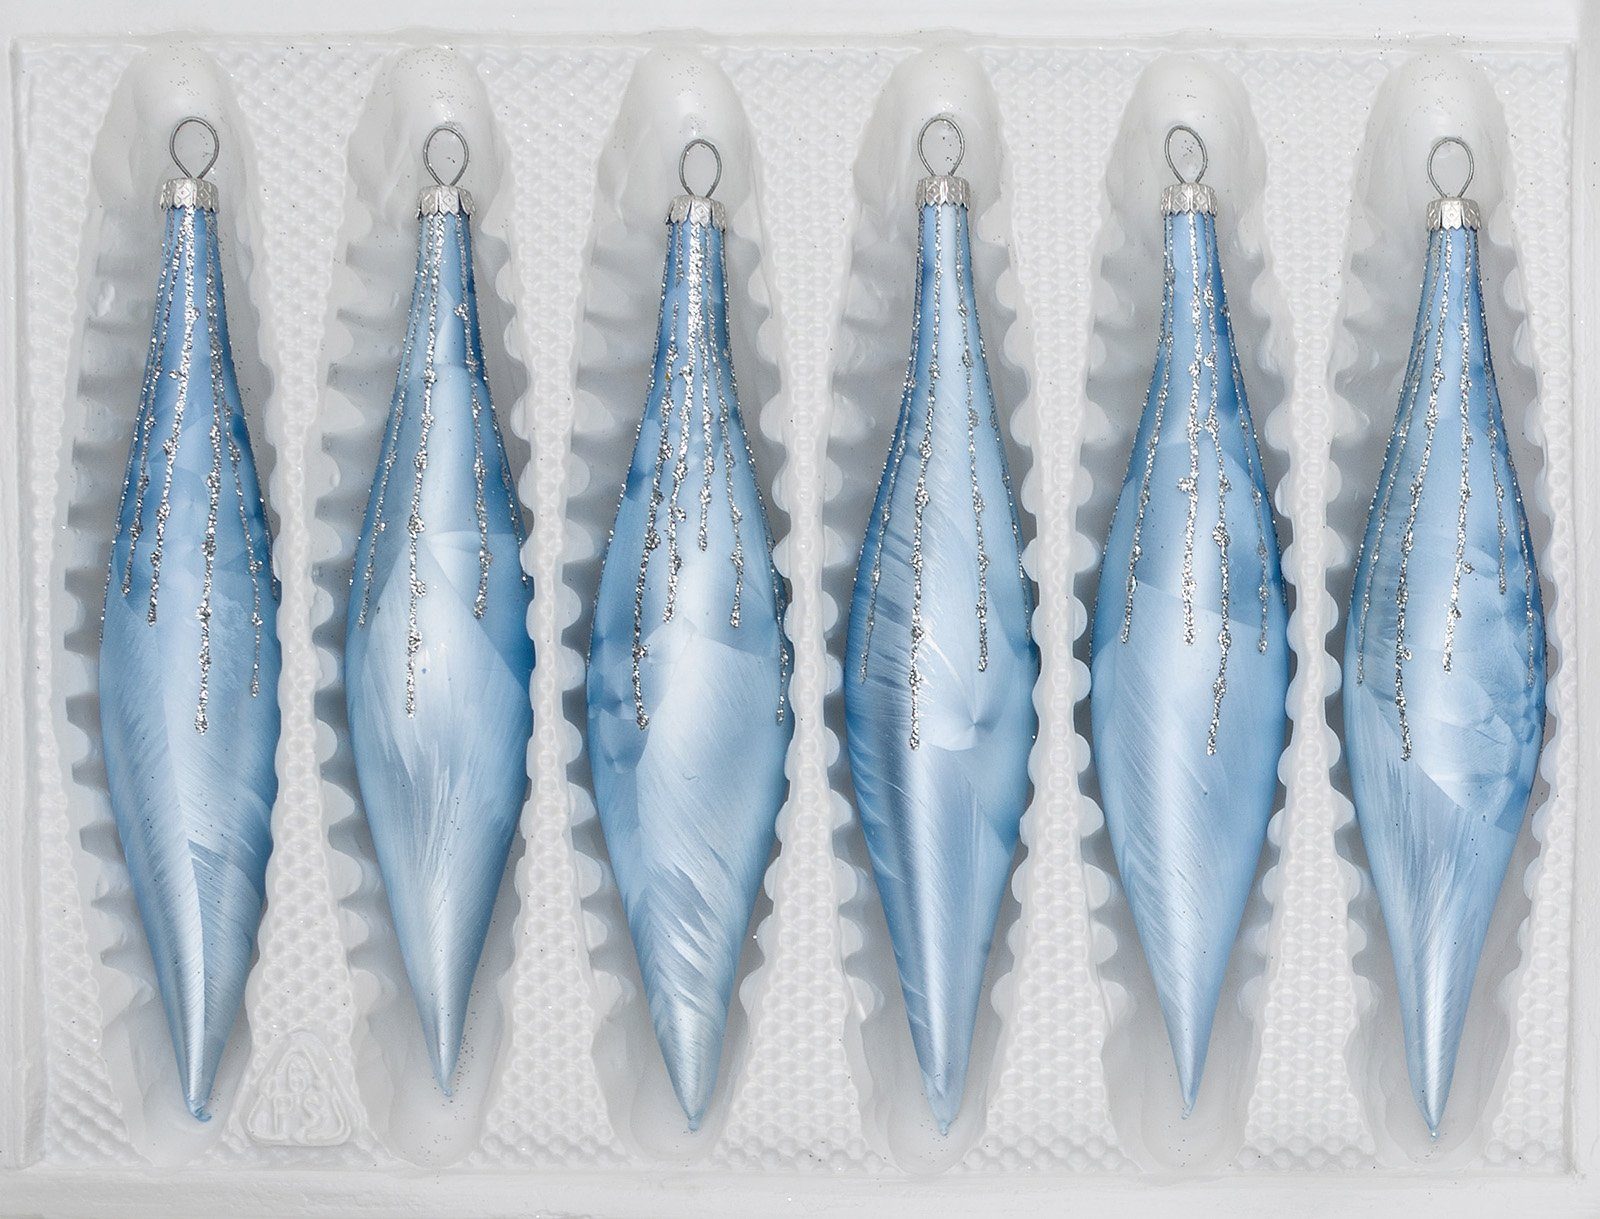 Navidacio Christbaumschmuck 6 tlg. Glas-Zapfen Set in Ice Blau Silber Regen